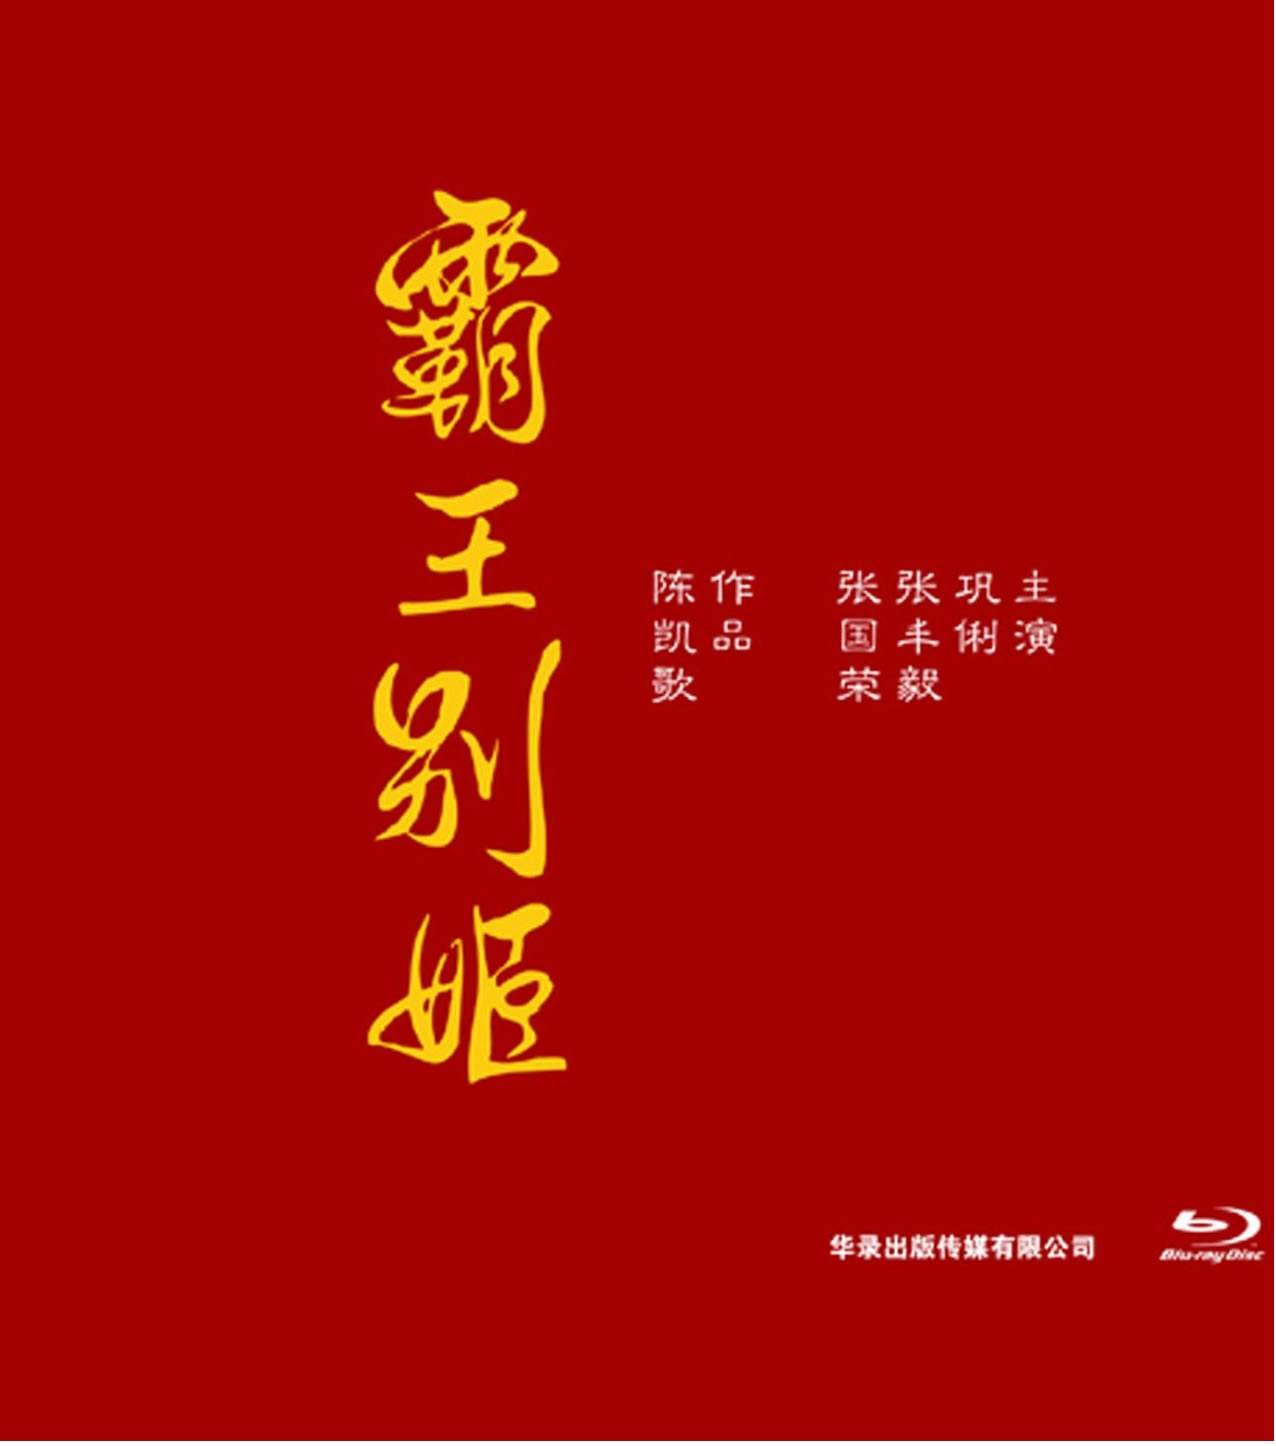 霸王别姬(BD50 蓝光碟)<br>ISBN:978-7-88763-174-9, 9787887631749